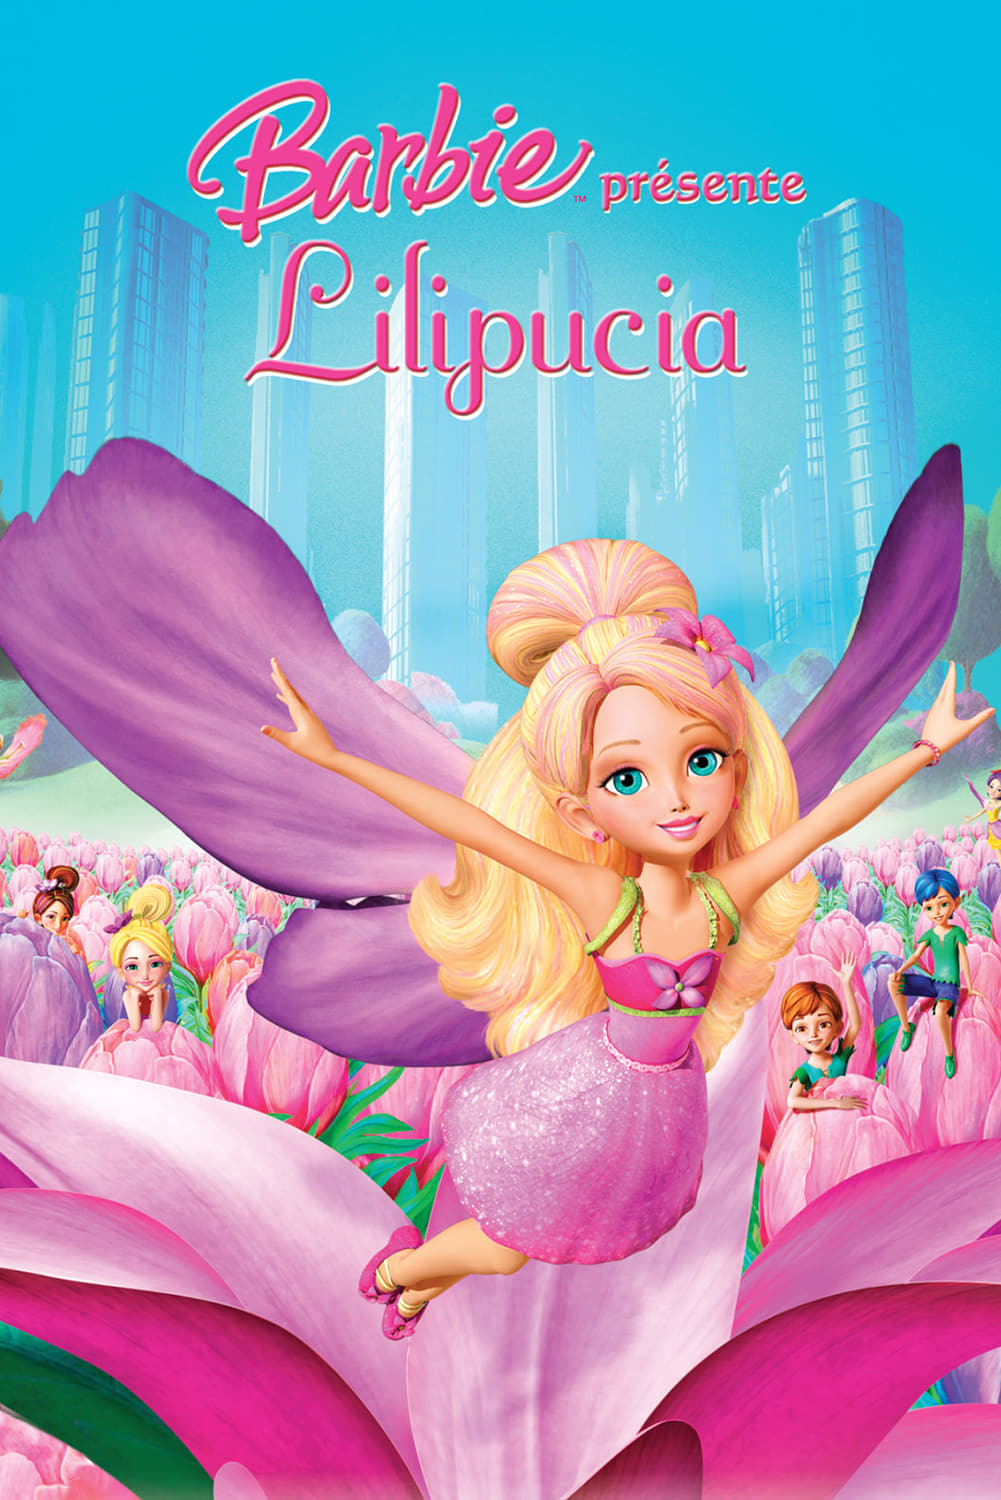 Barbie présente Lilipucia streaming